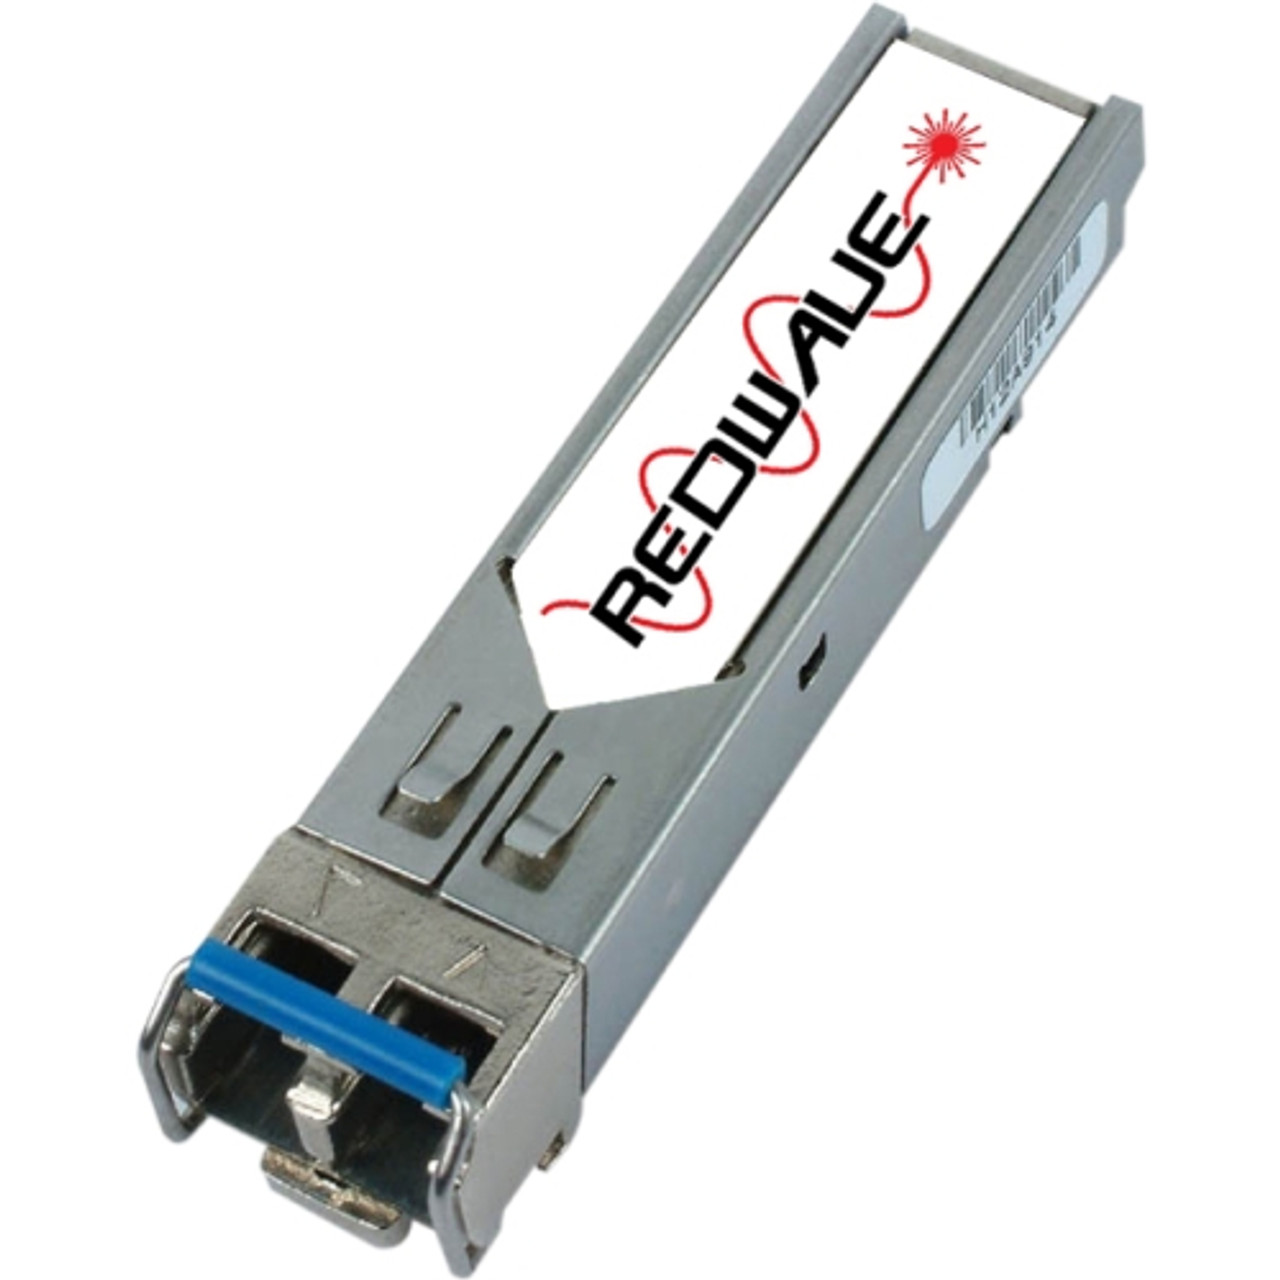 J4858C-RW Redwave 1Gbps 1000Base-SX Multi-mode Fiber 550m 850nm Duplex LC Connector SFP (Mini-GBIC) Transceiver Module